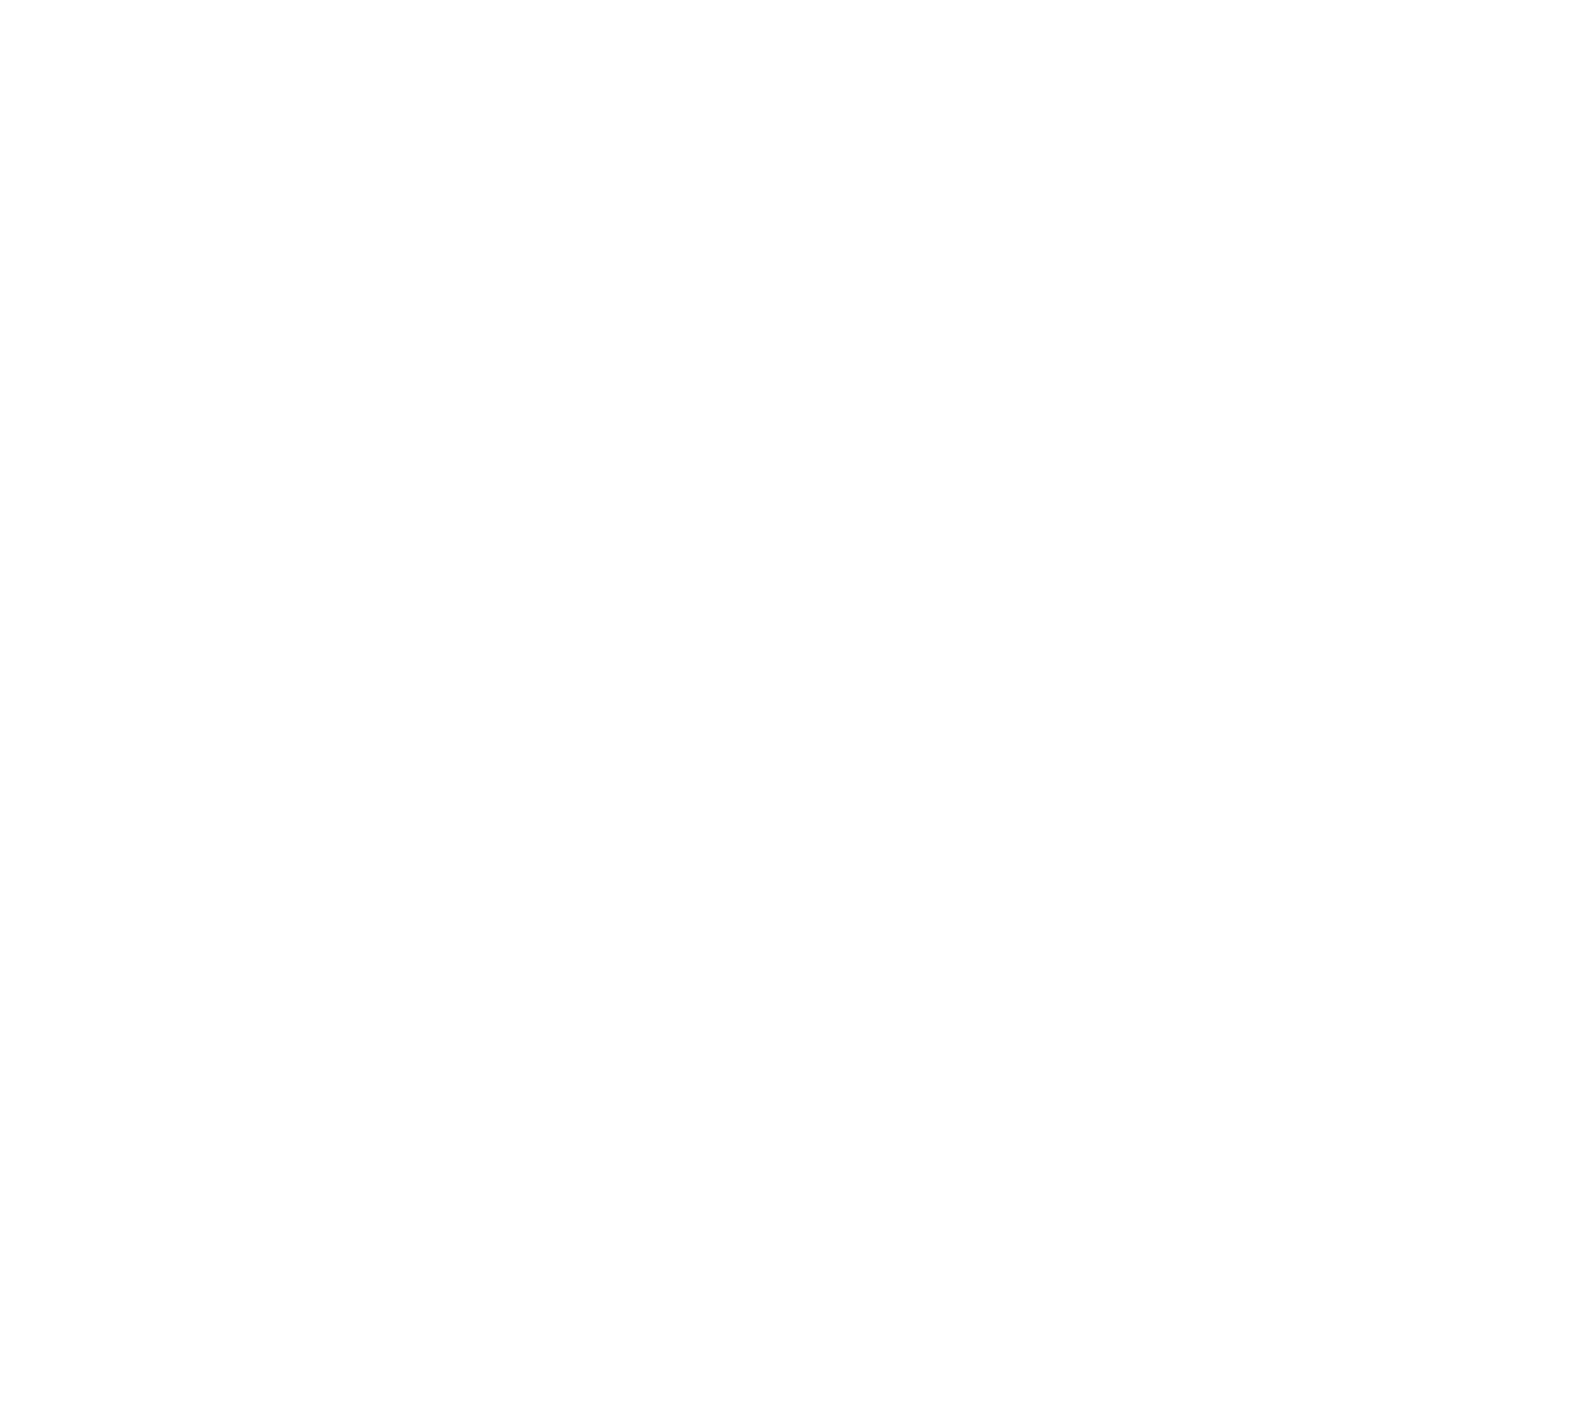 Energous logo for dark backgrounds (transparent PNG)